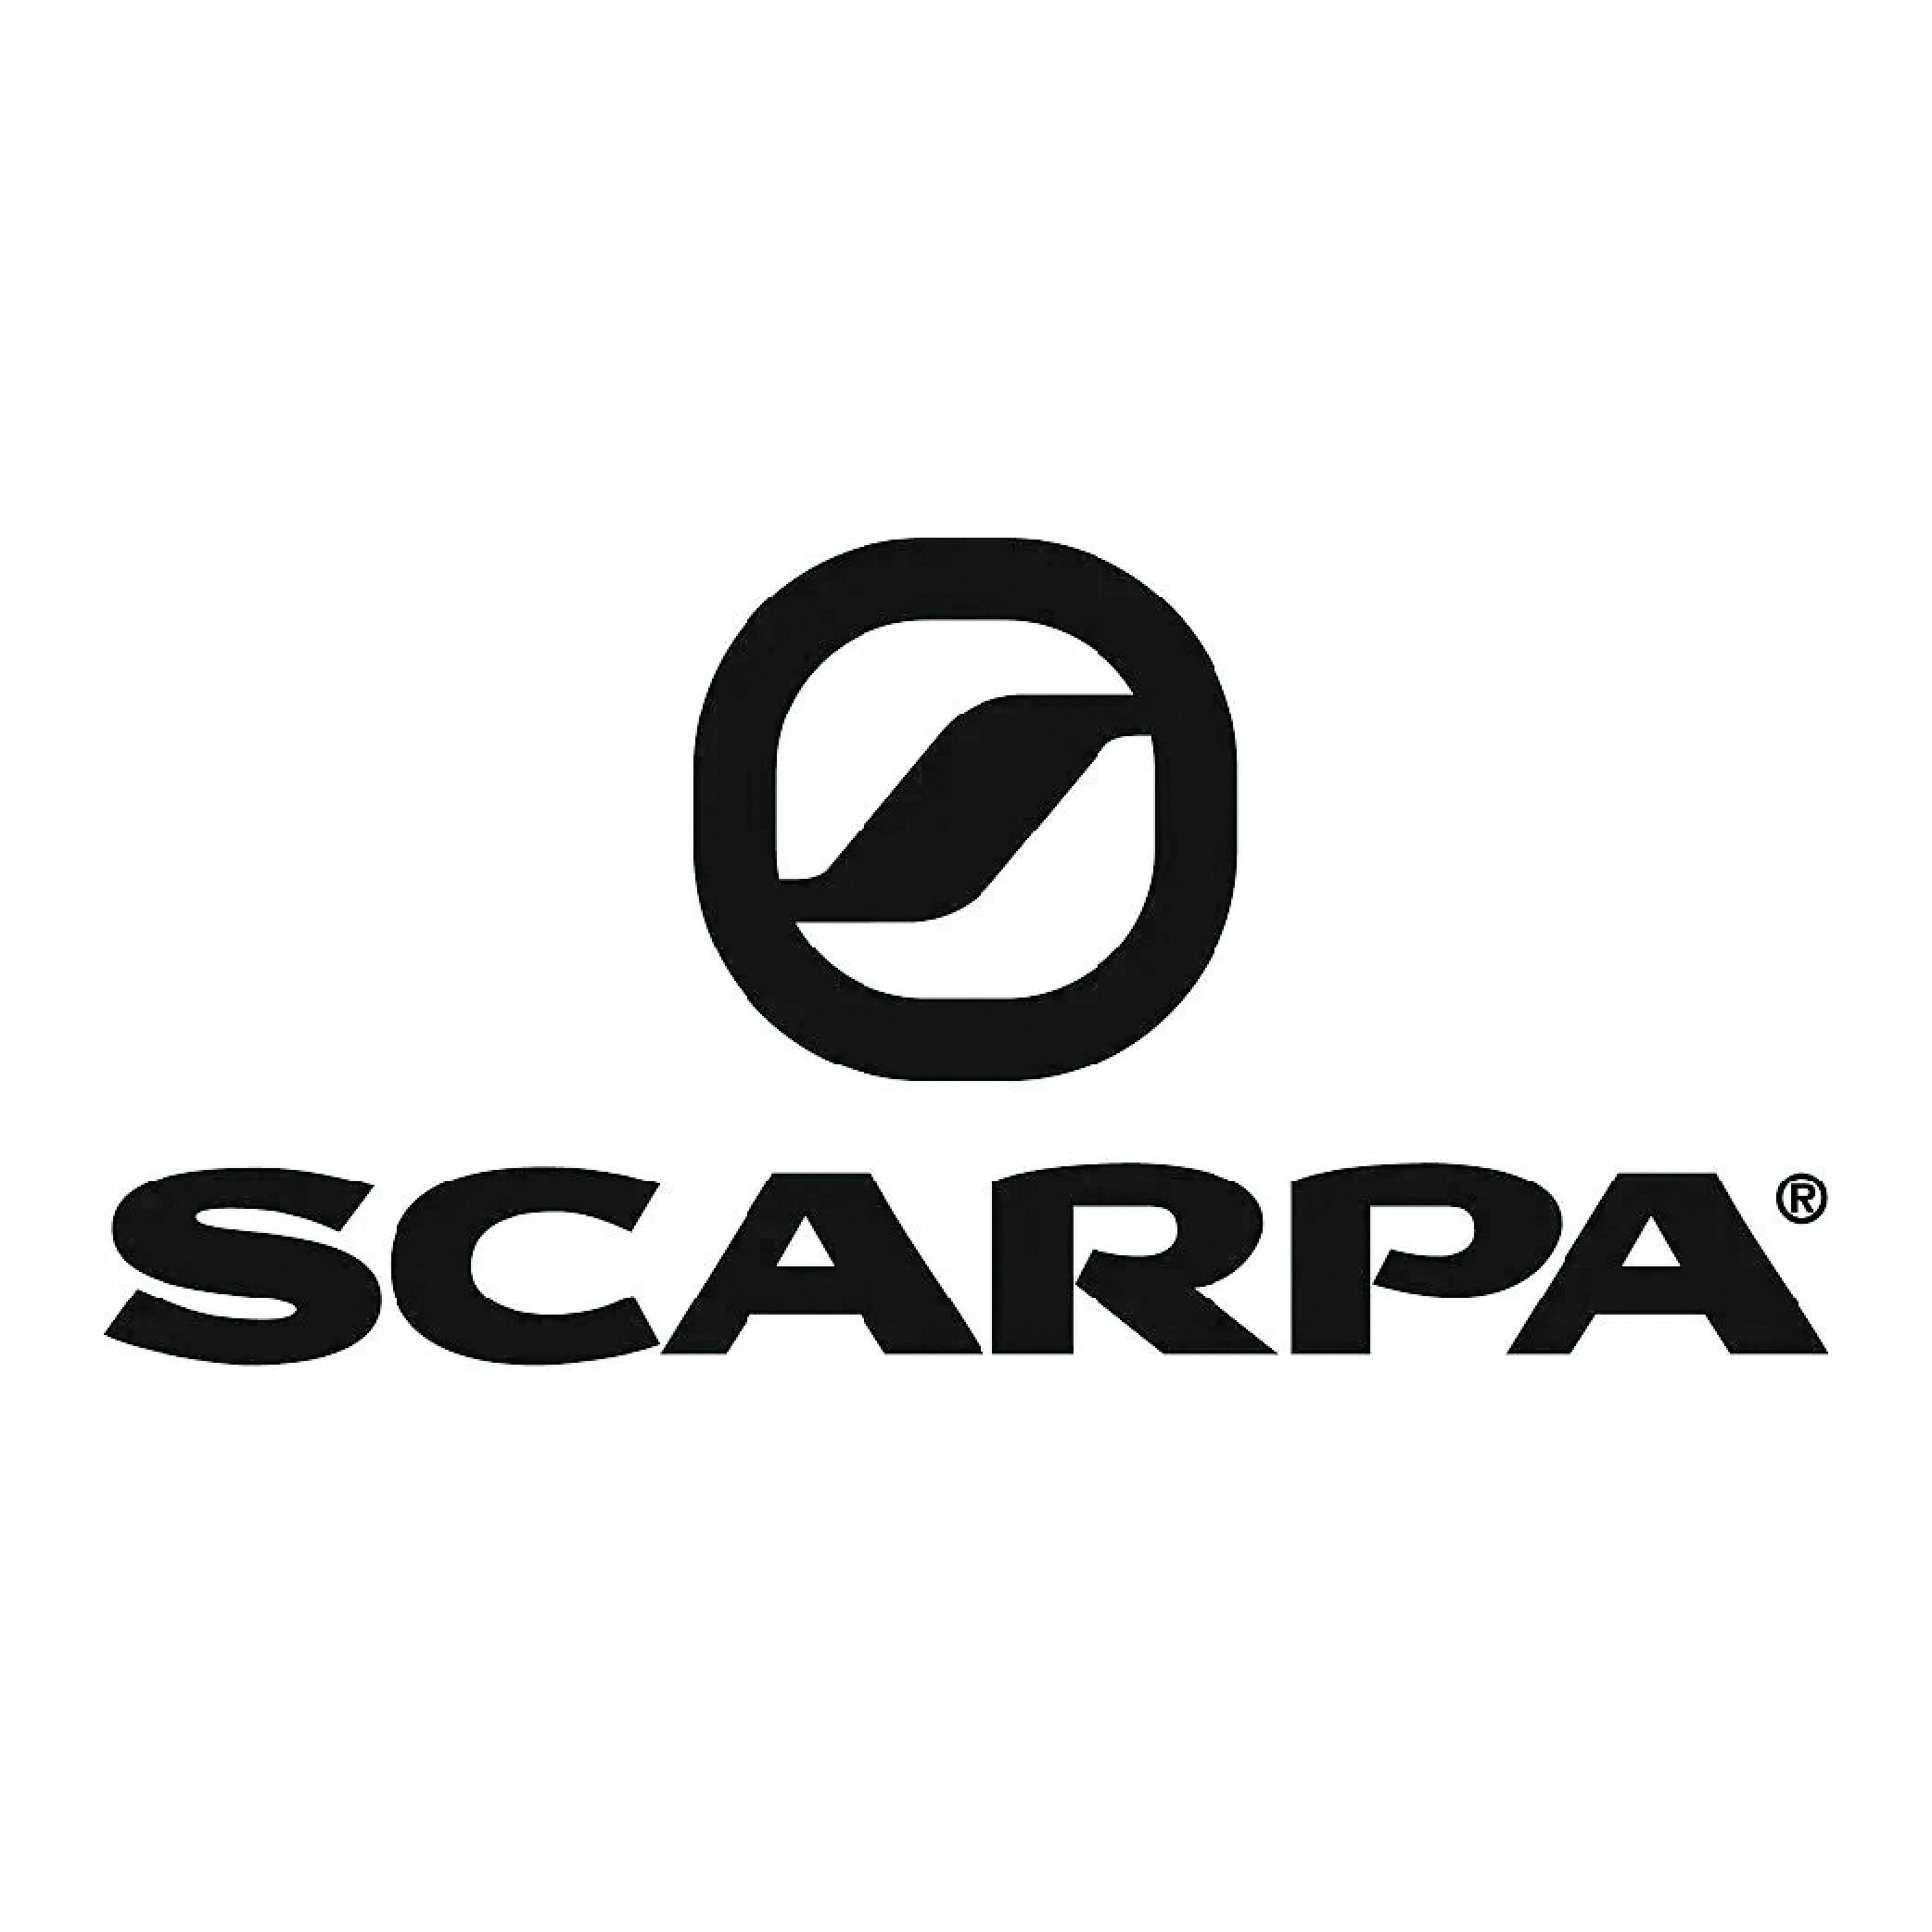 Scarpa logo